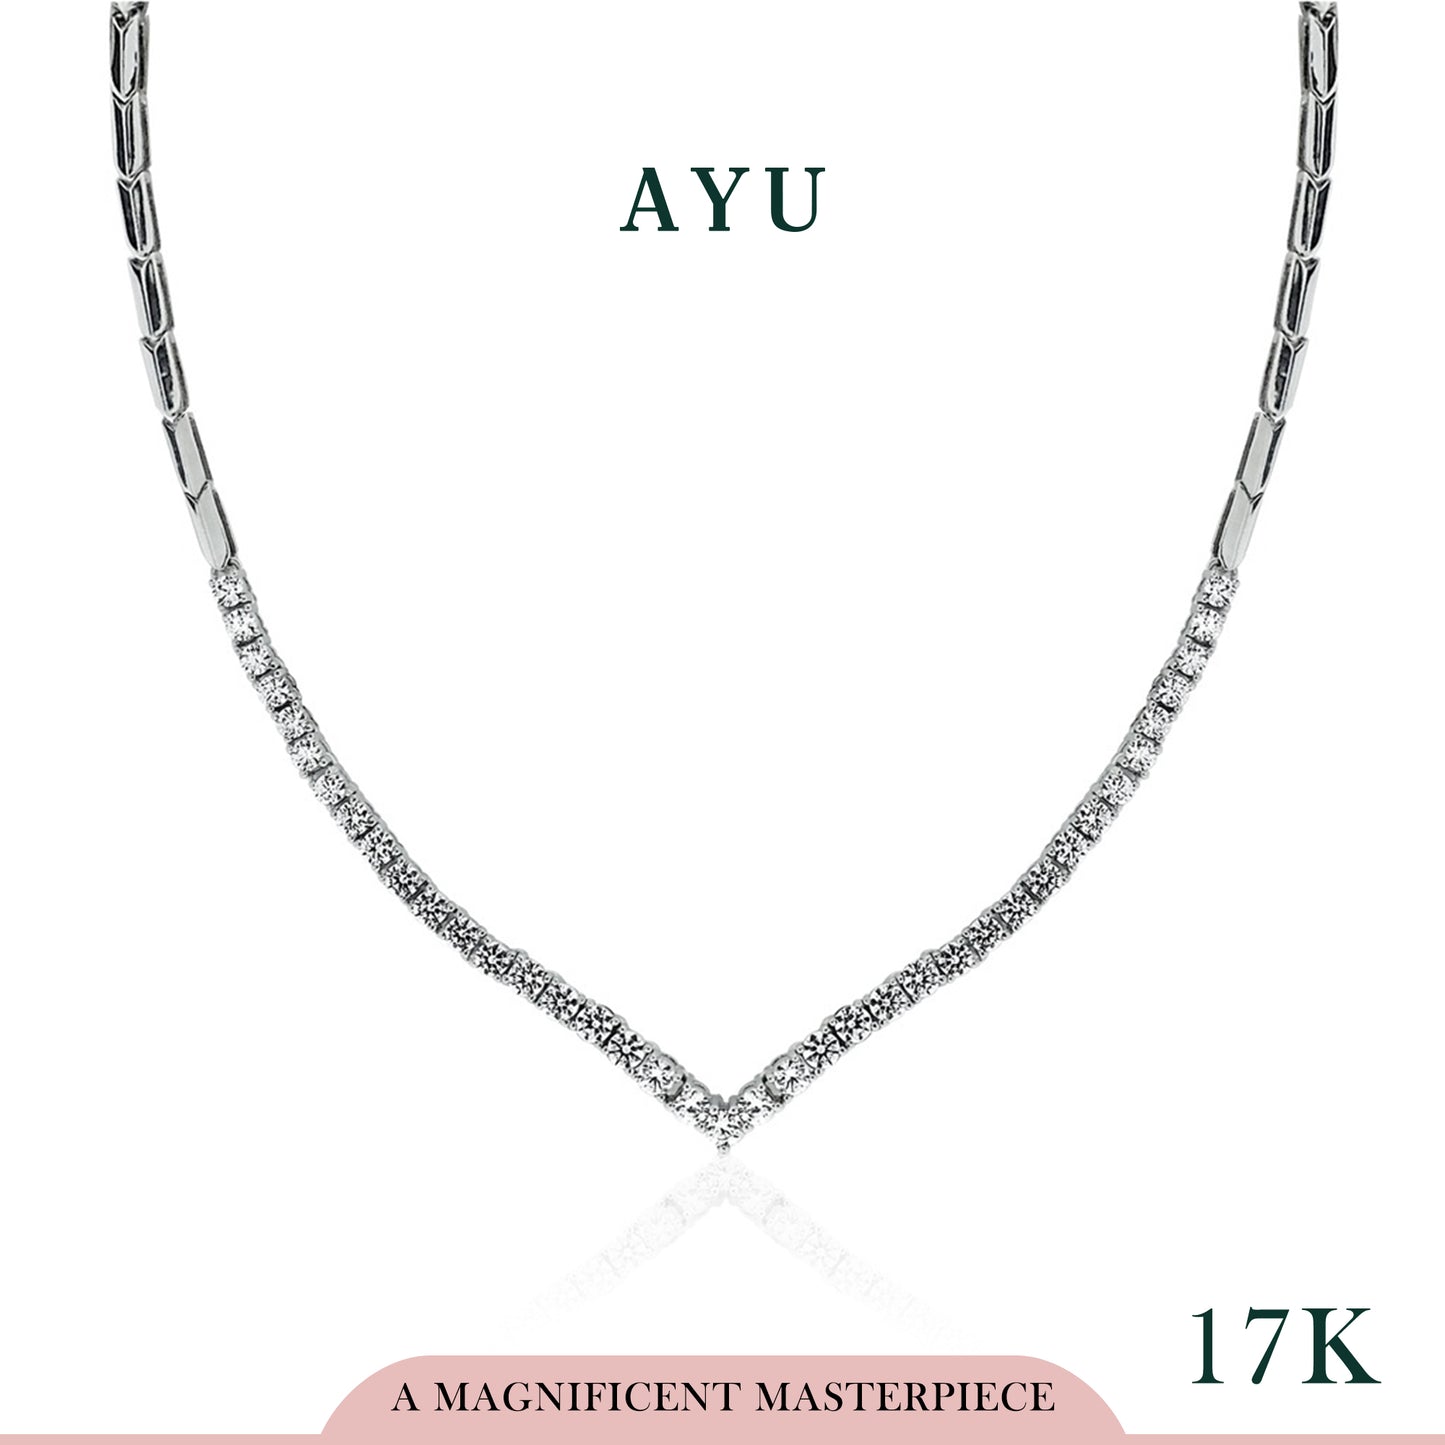 AYU Glam Necklace 17K White Gold